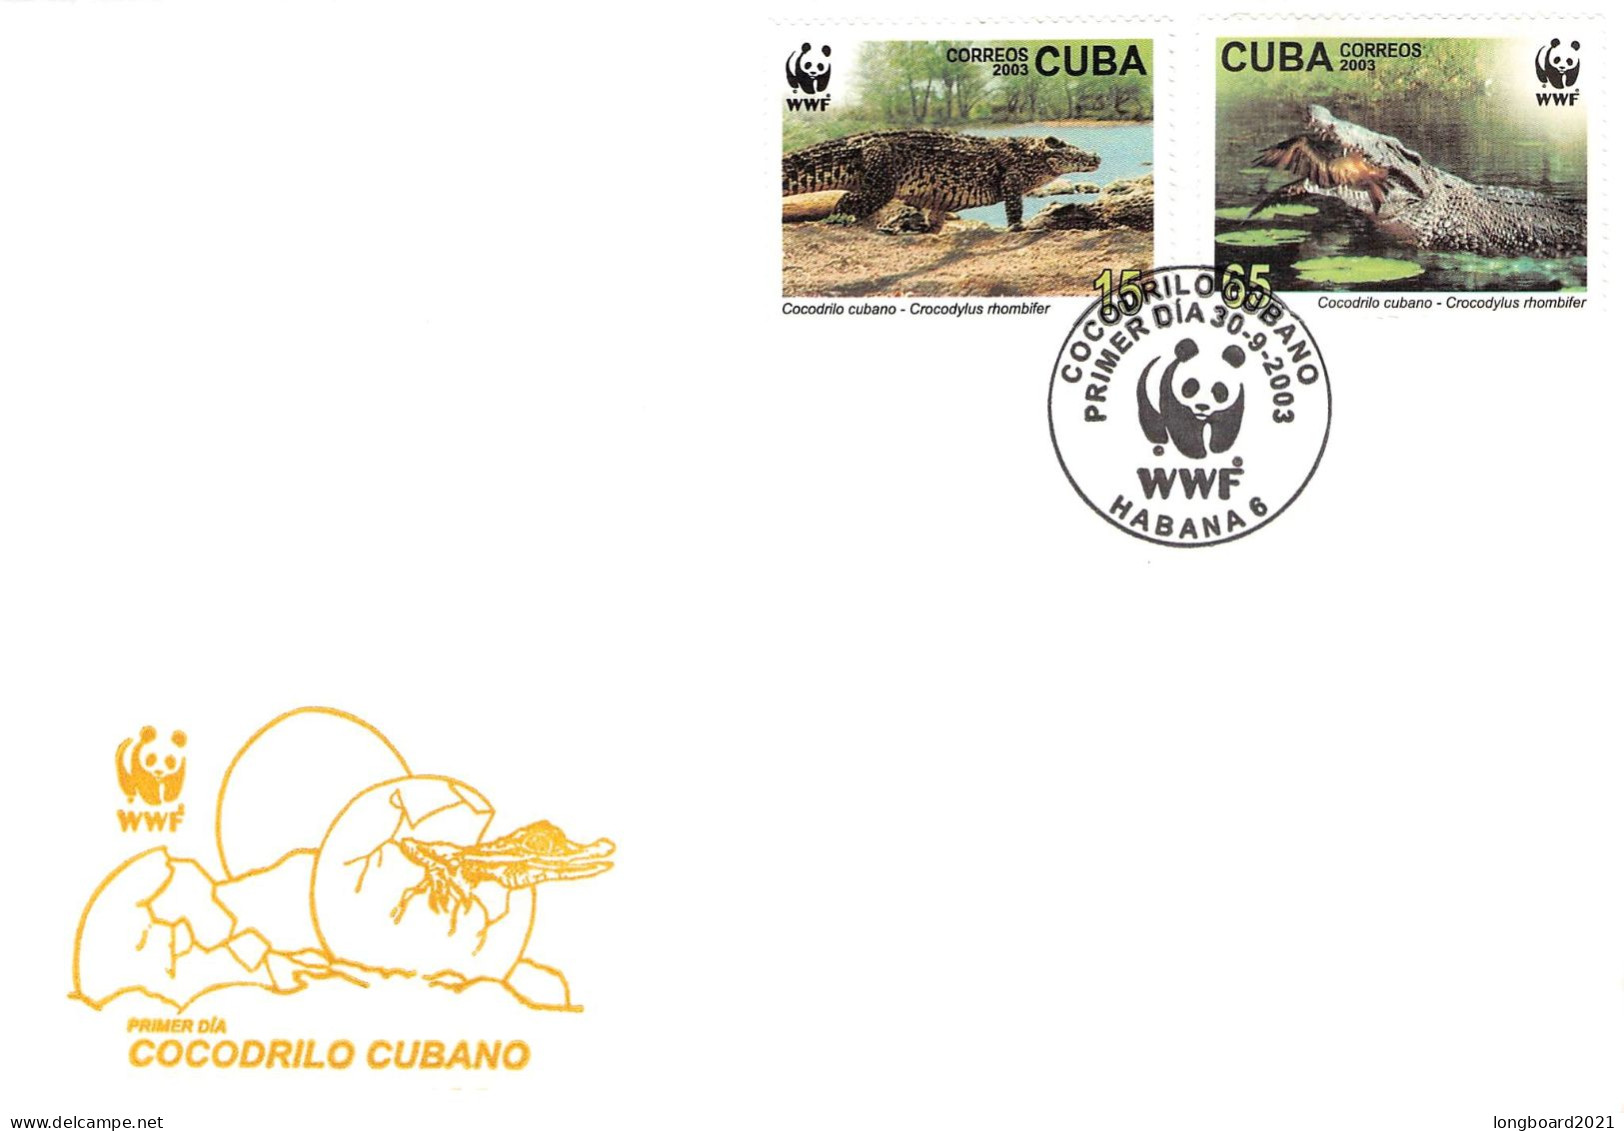 CUBA - FDC WWF 2003 - CROCODILE / 4152 - FDC